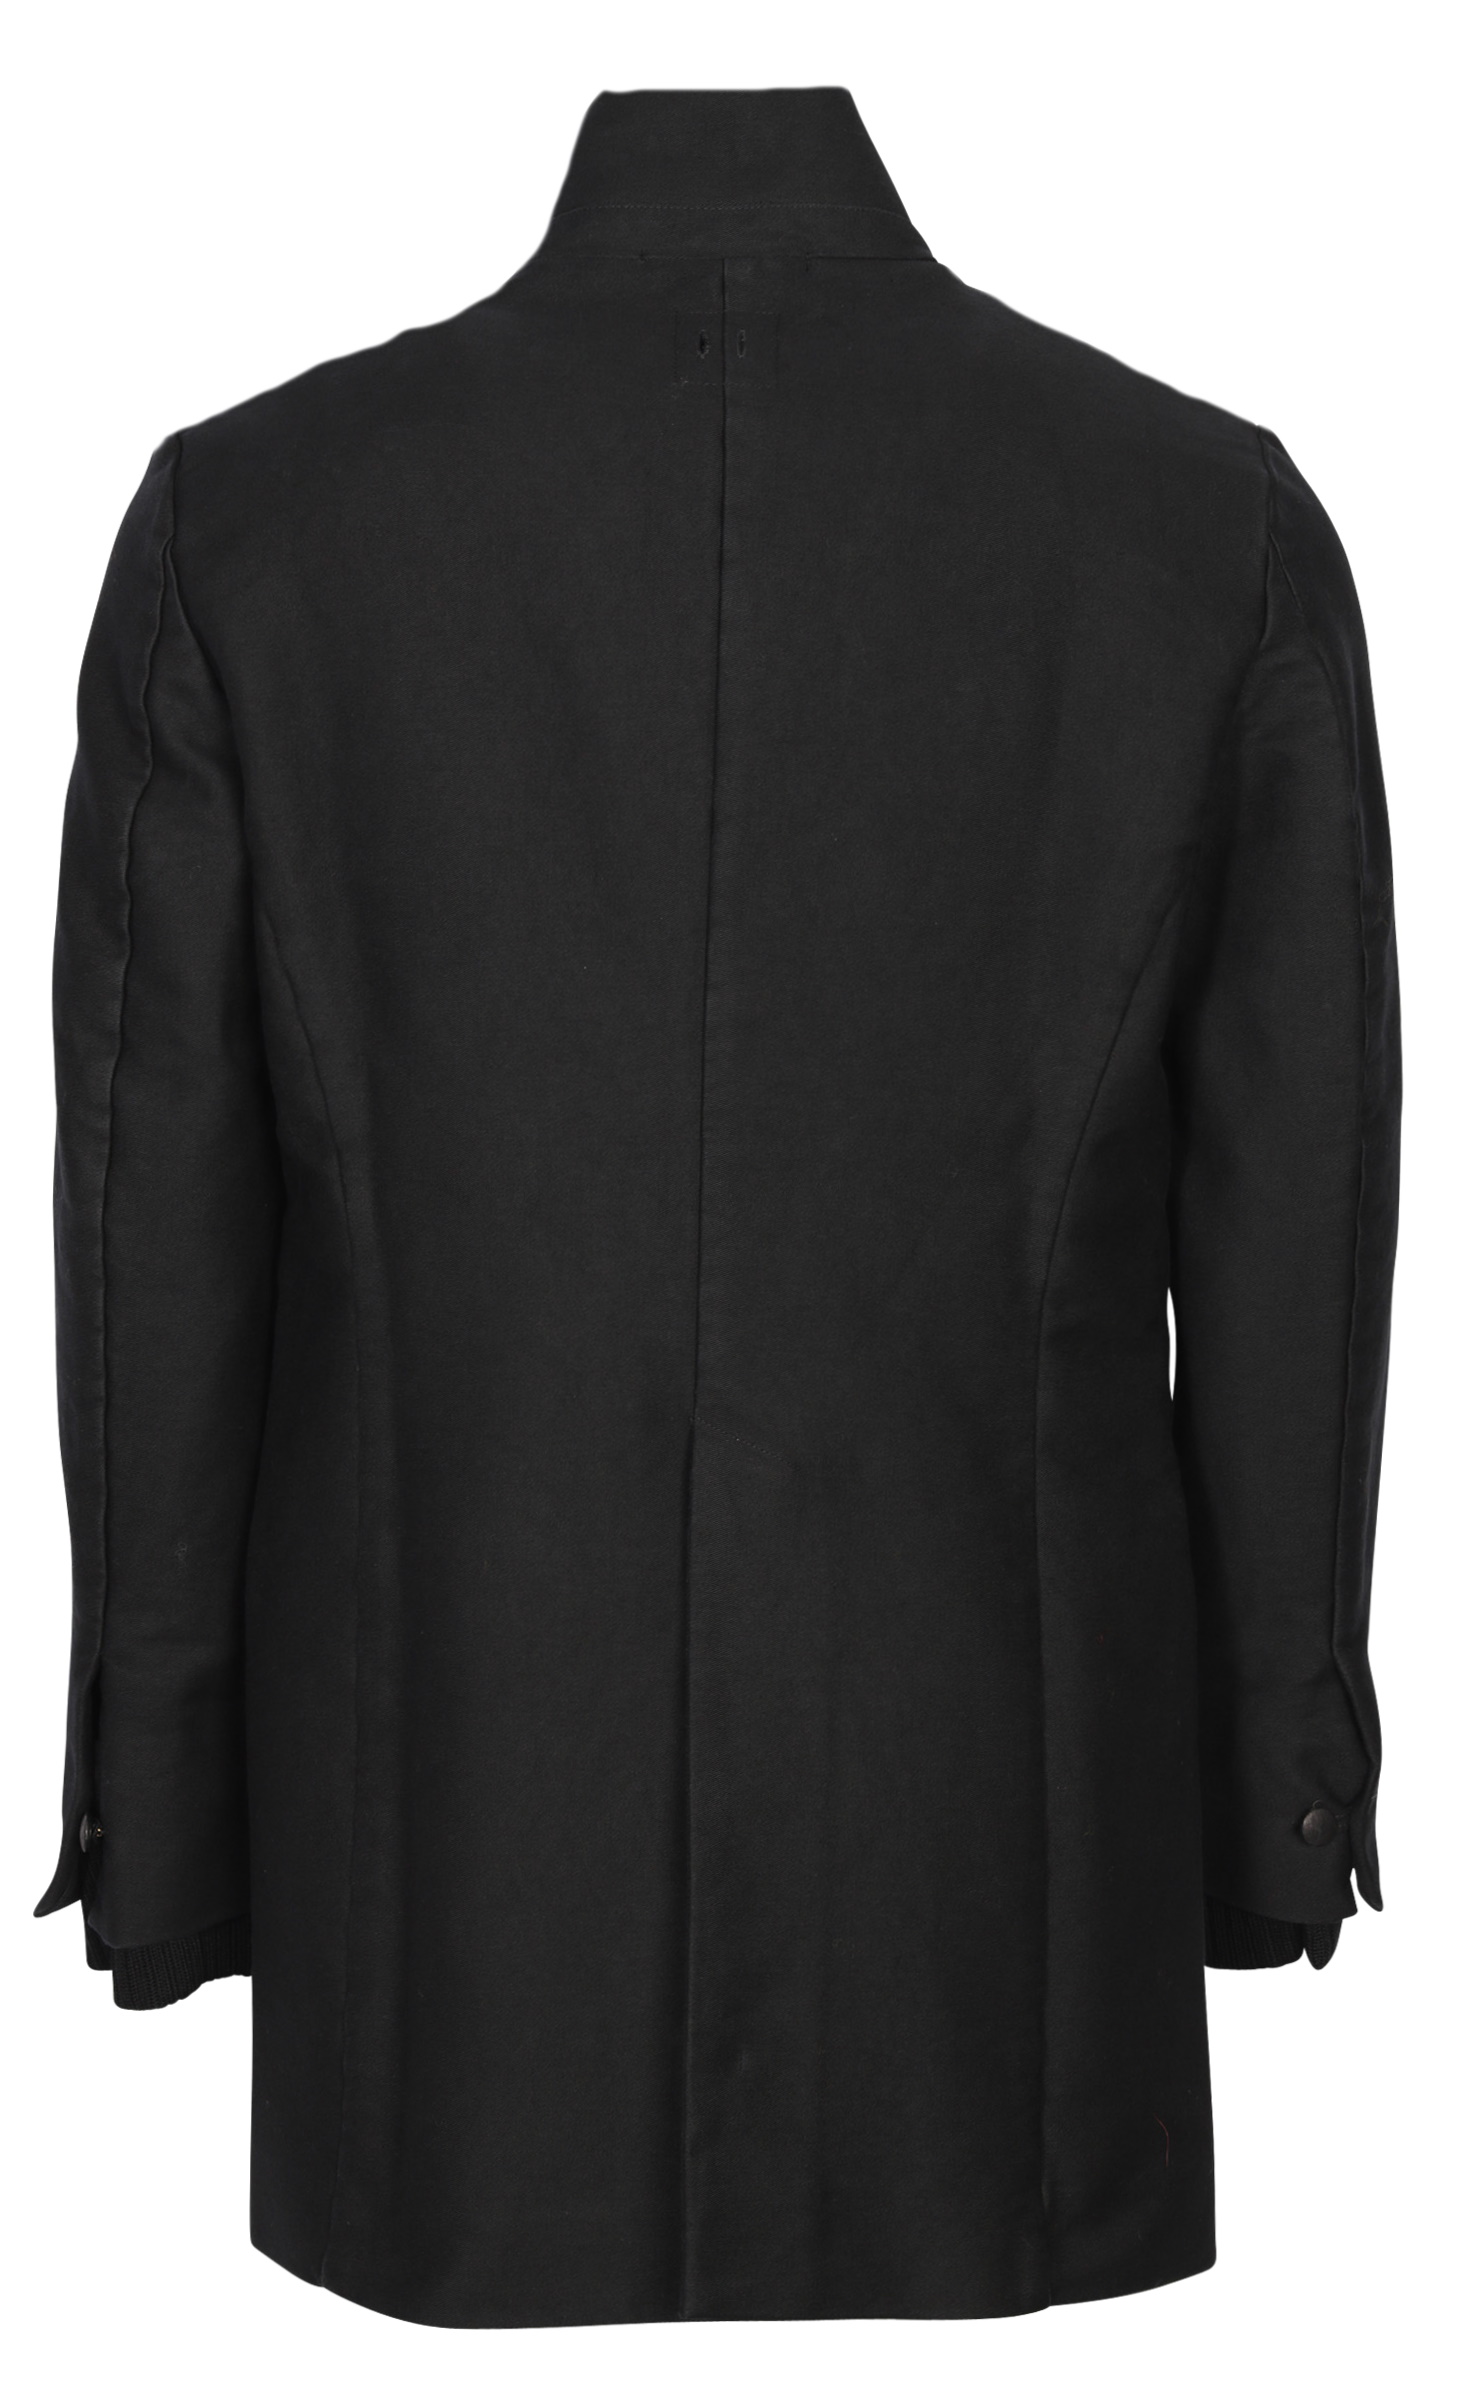 Hannes Roether "Deutsch Leder" Coat in Black